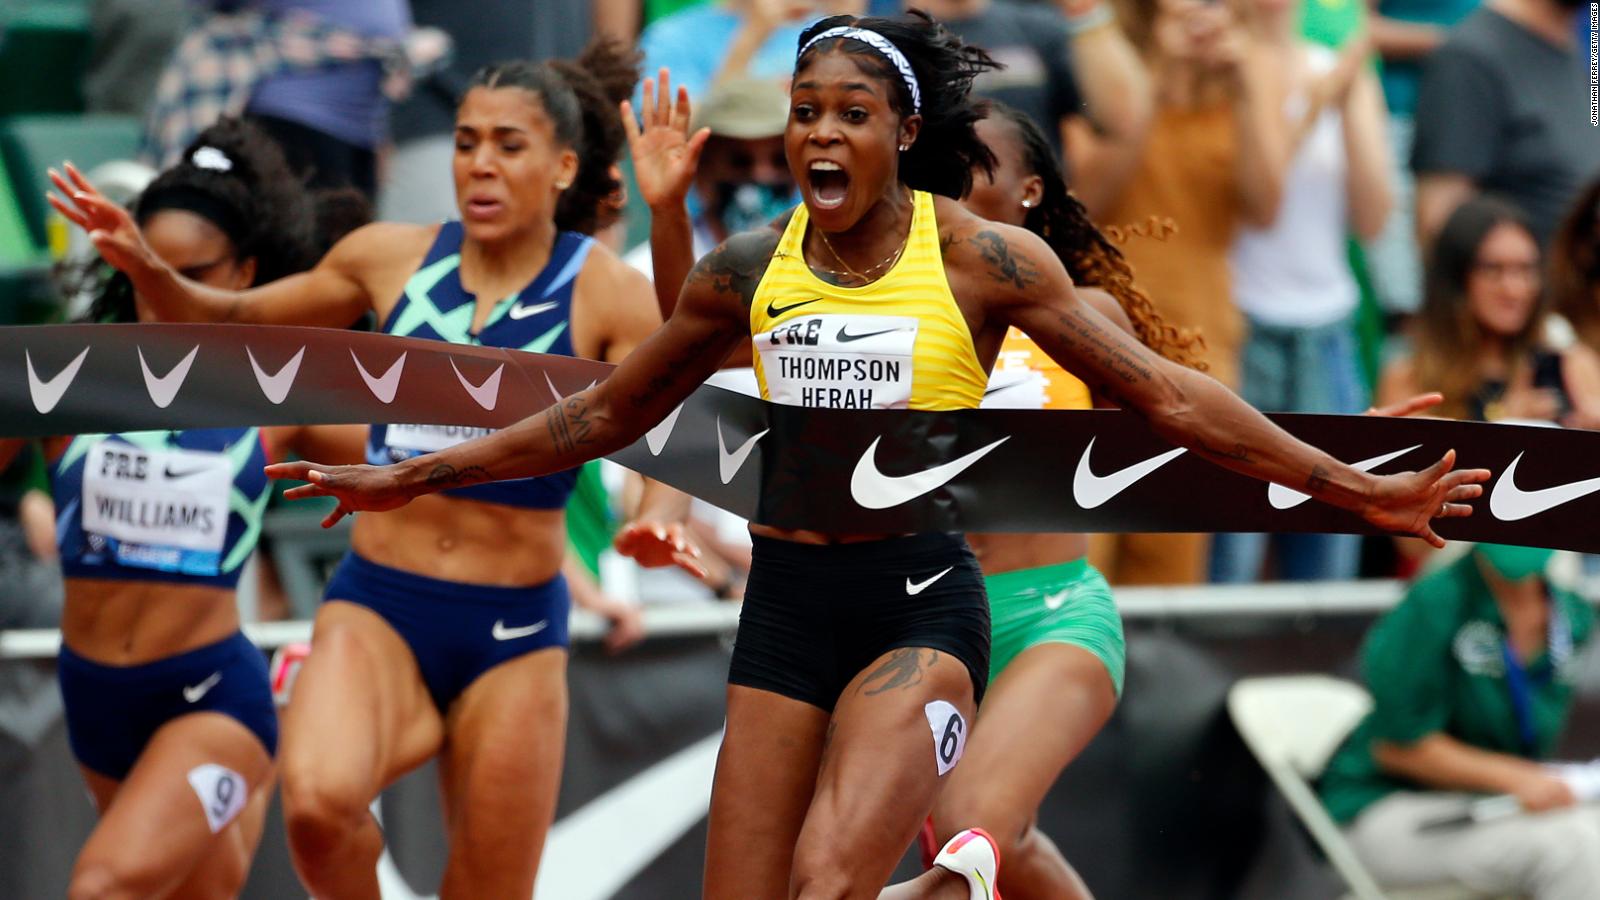 Elaine ThompsonHerah Olympic champion runs second fastest women’s